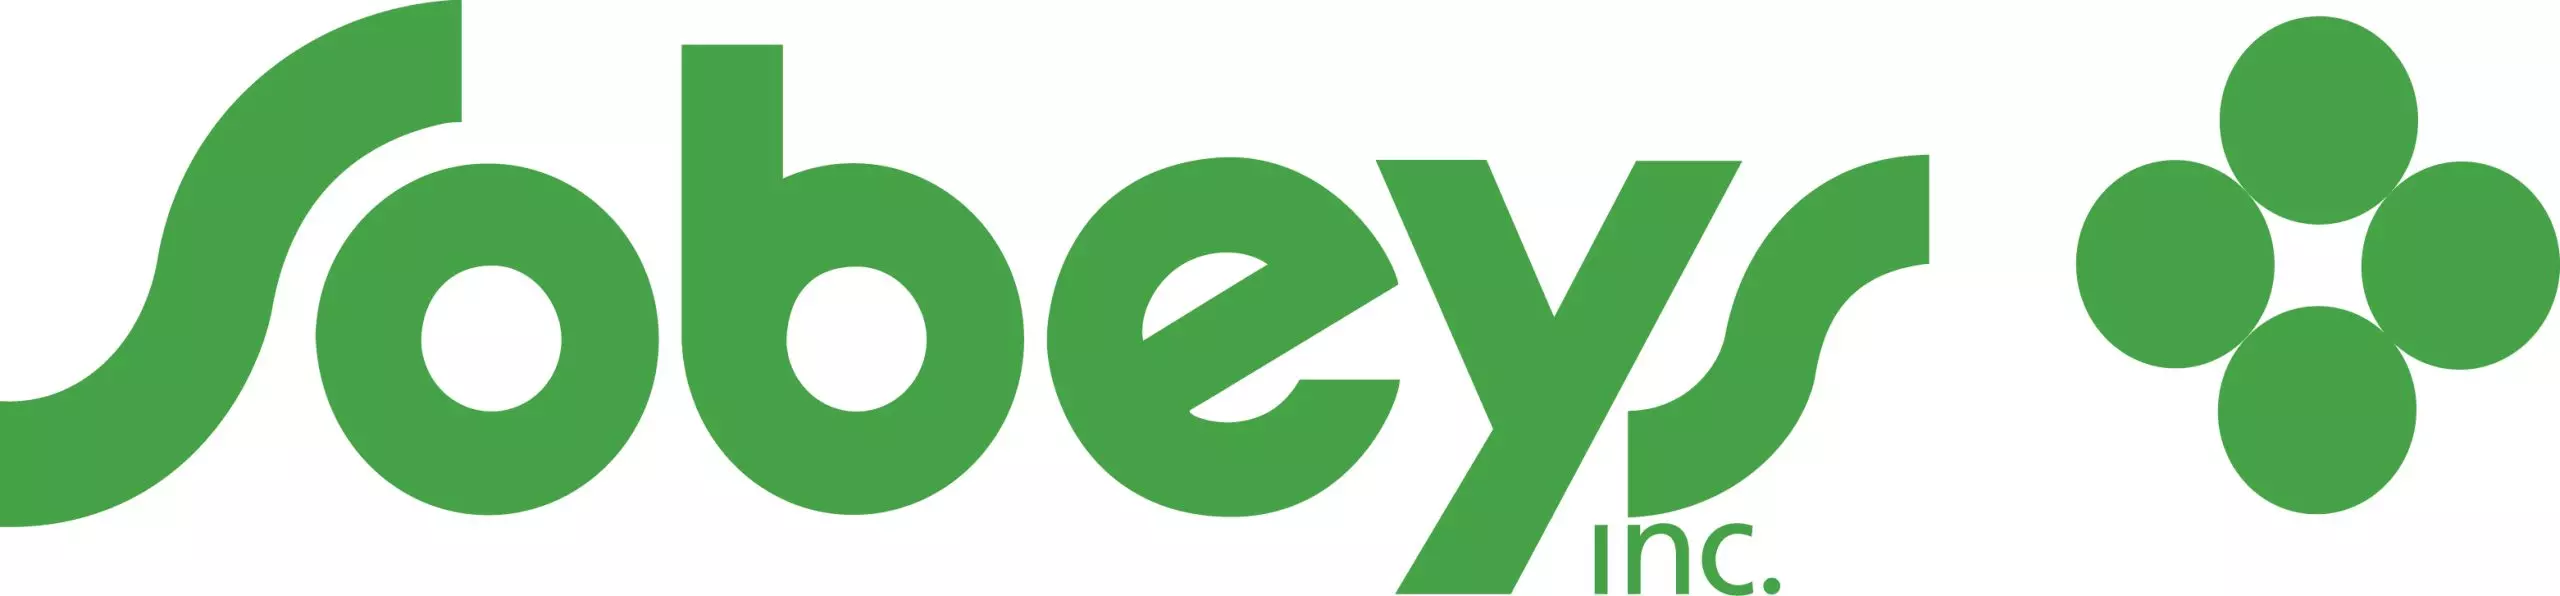 Sobeys logo_1